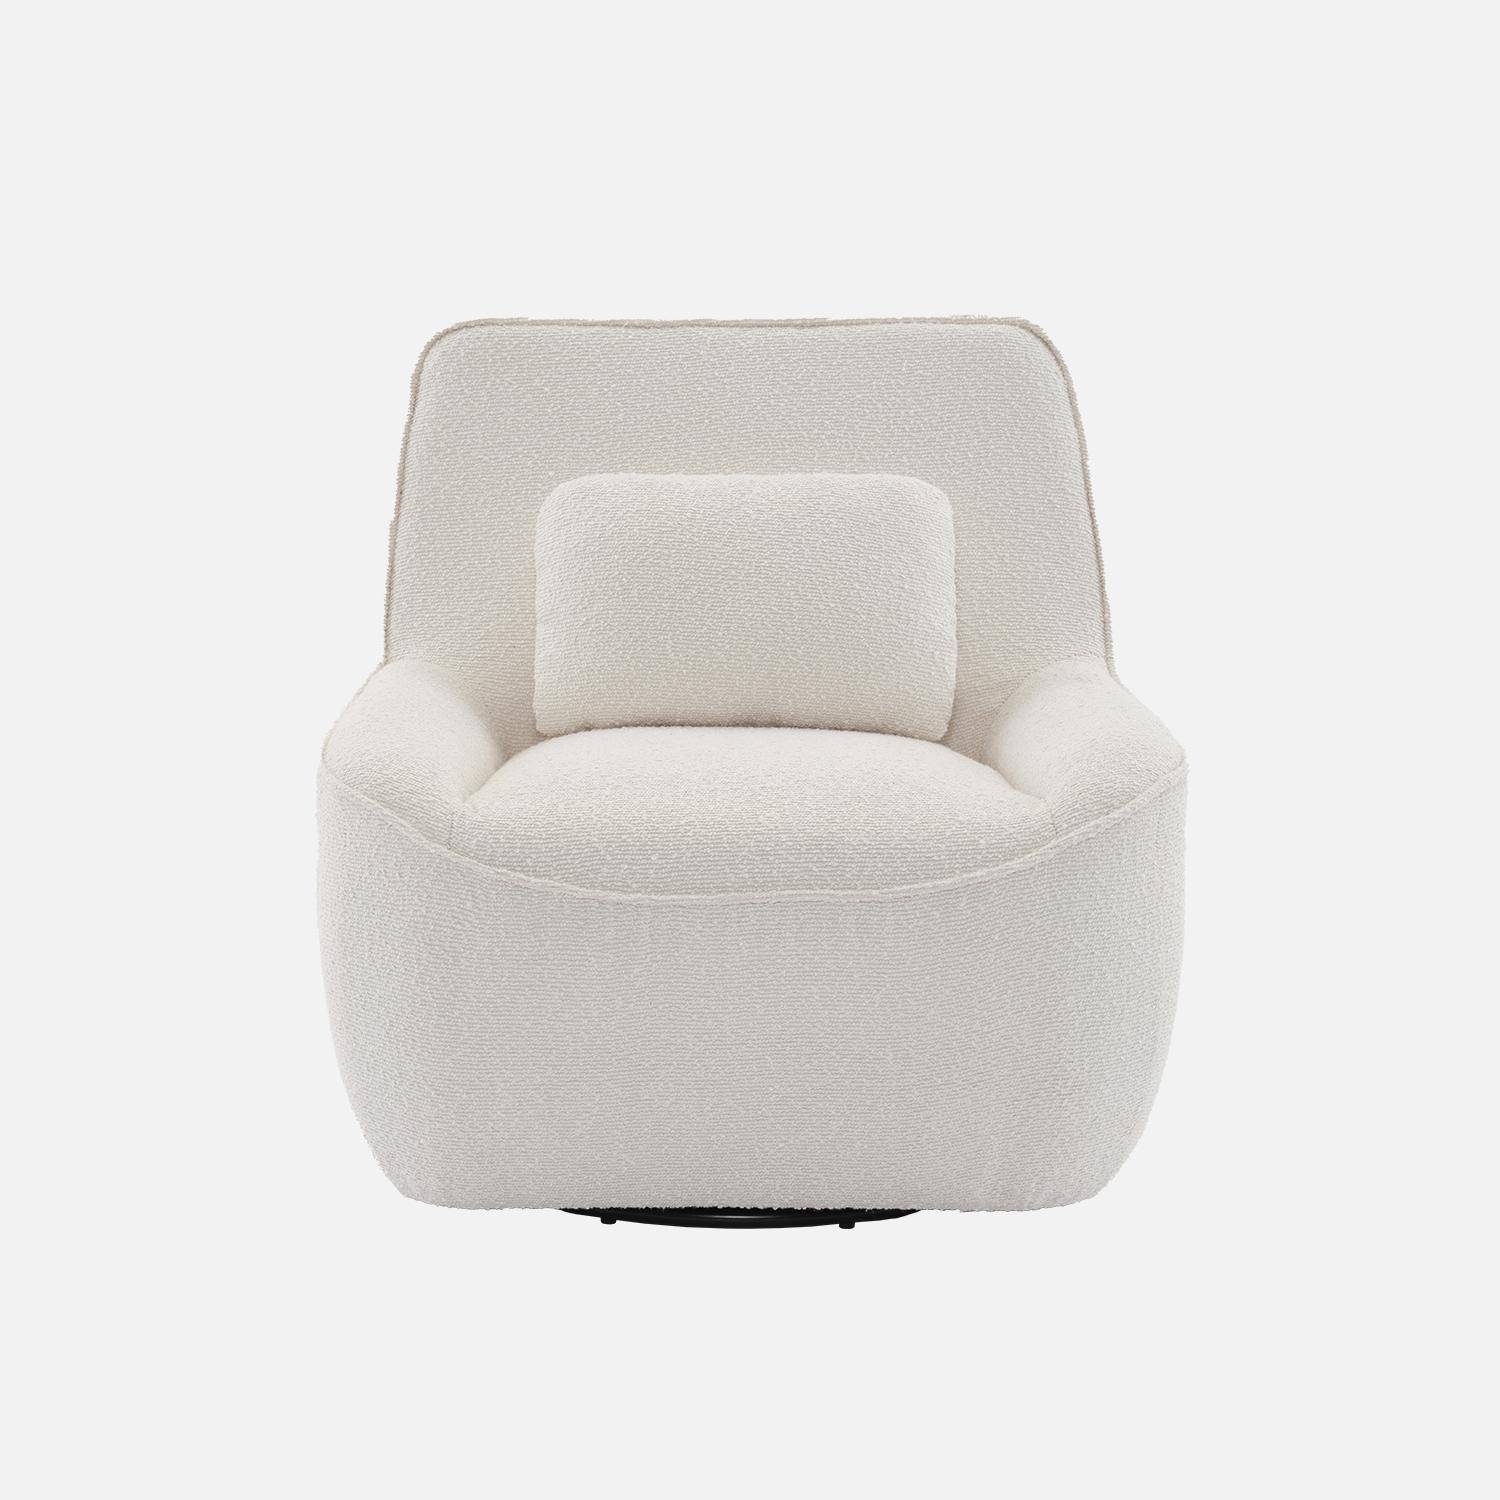 360° draaibare fauteuil in wit bouclé afneembaar kussen, Lounge, B 83 x D 83 x H 83cm Photo5